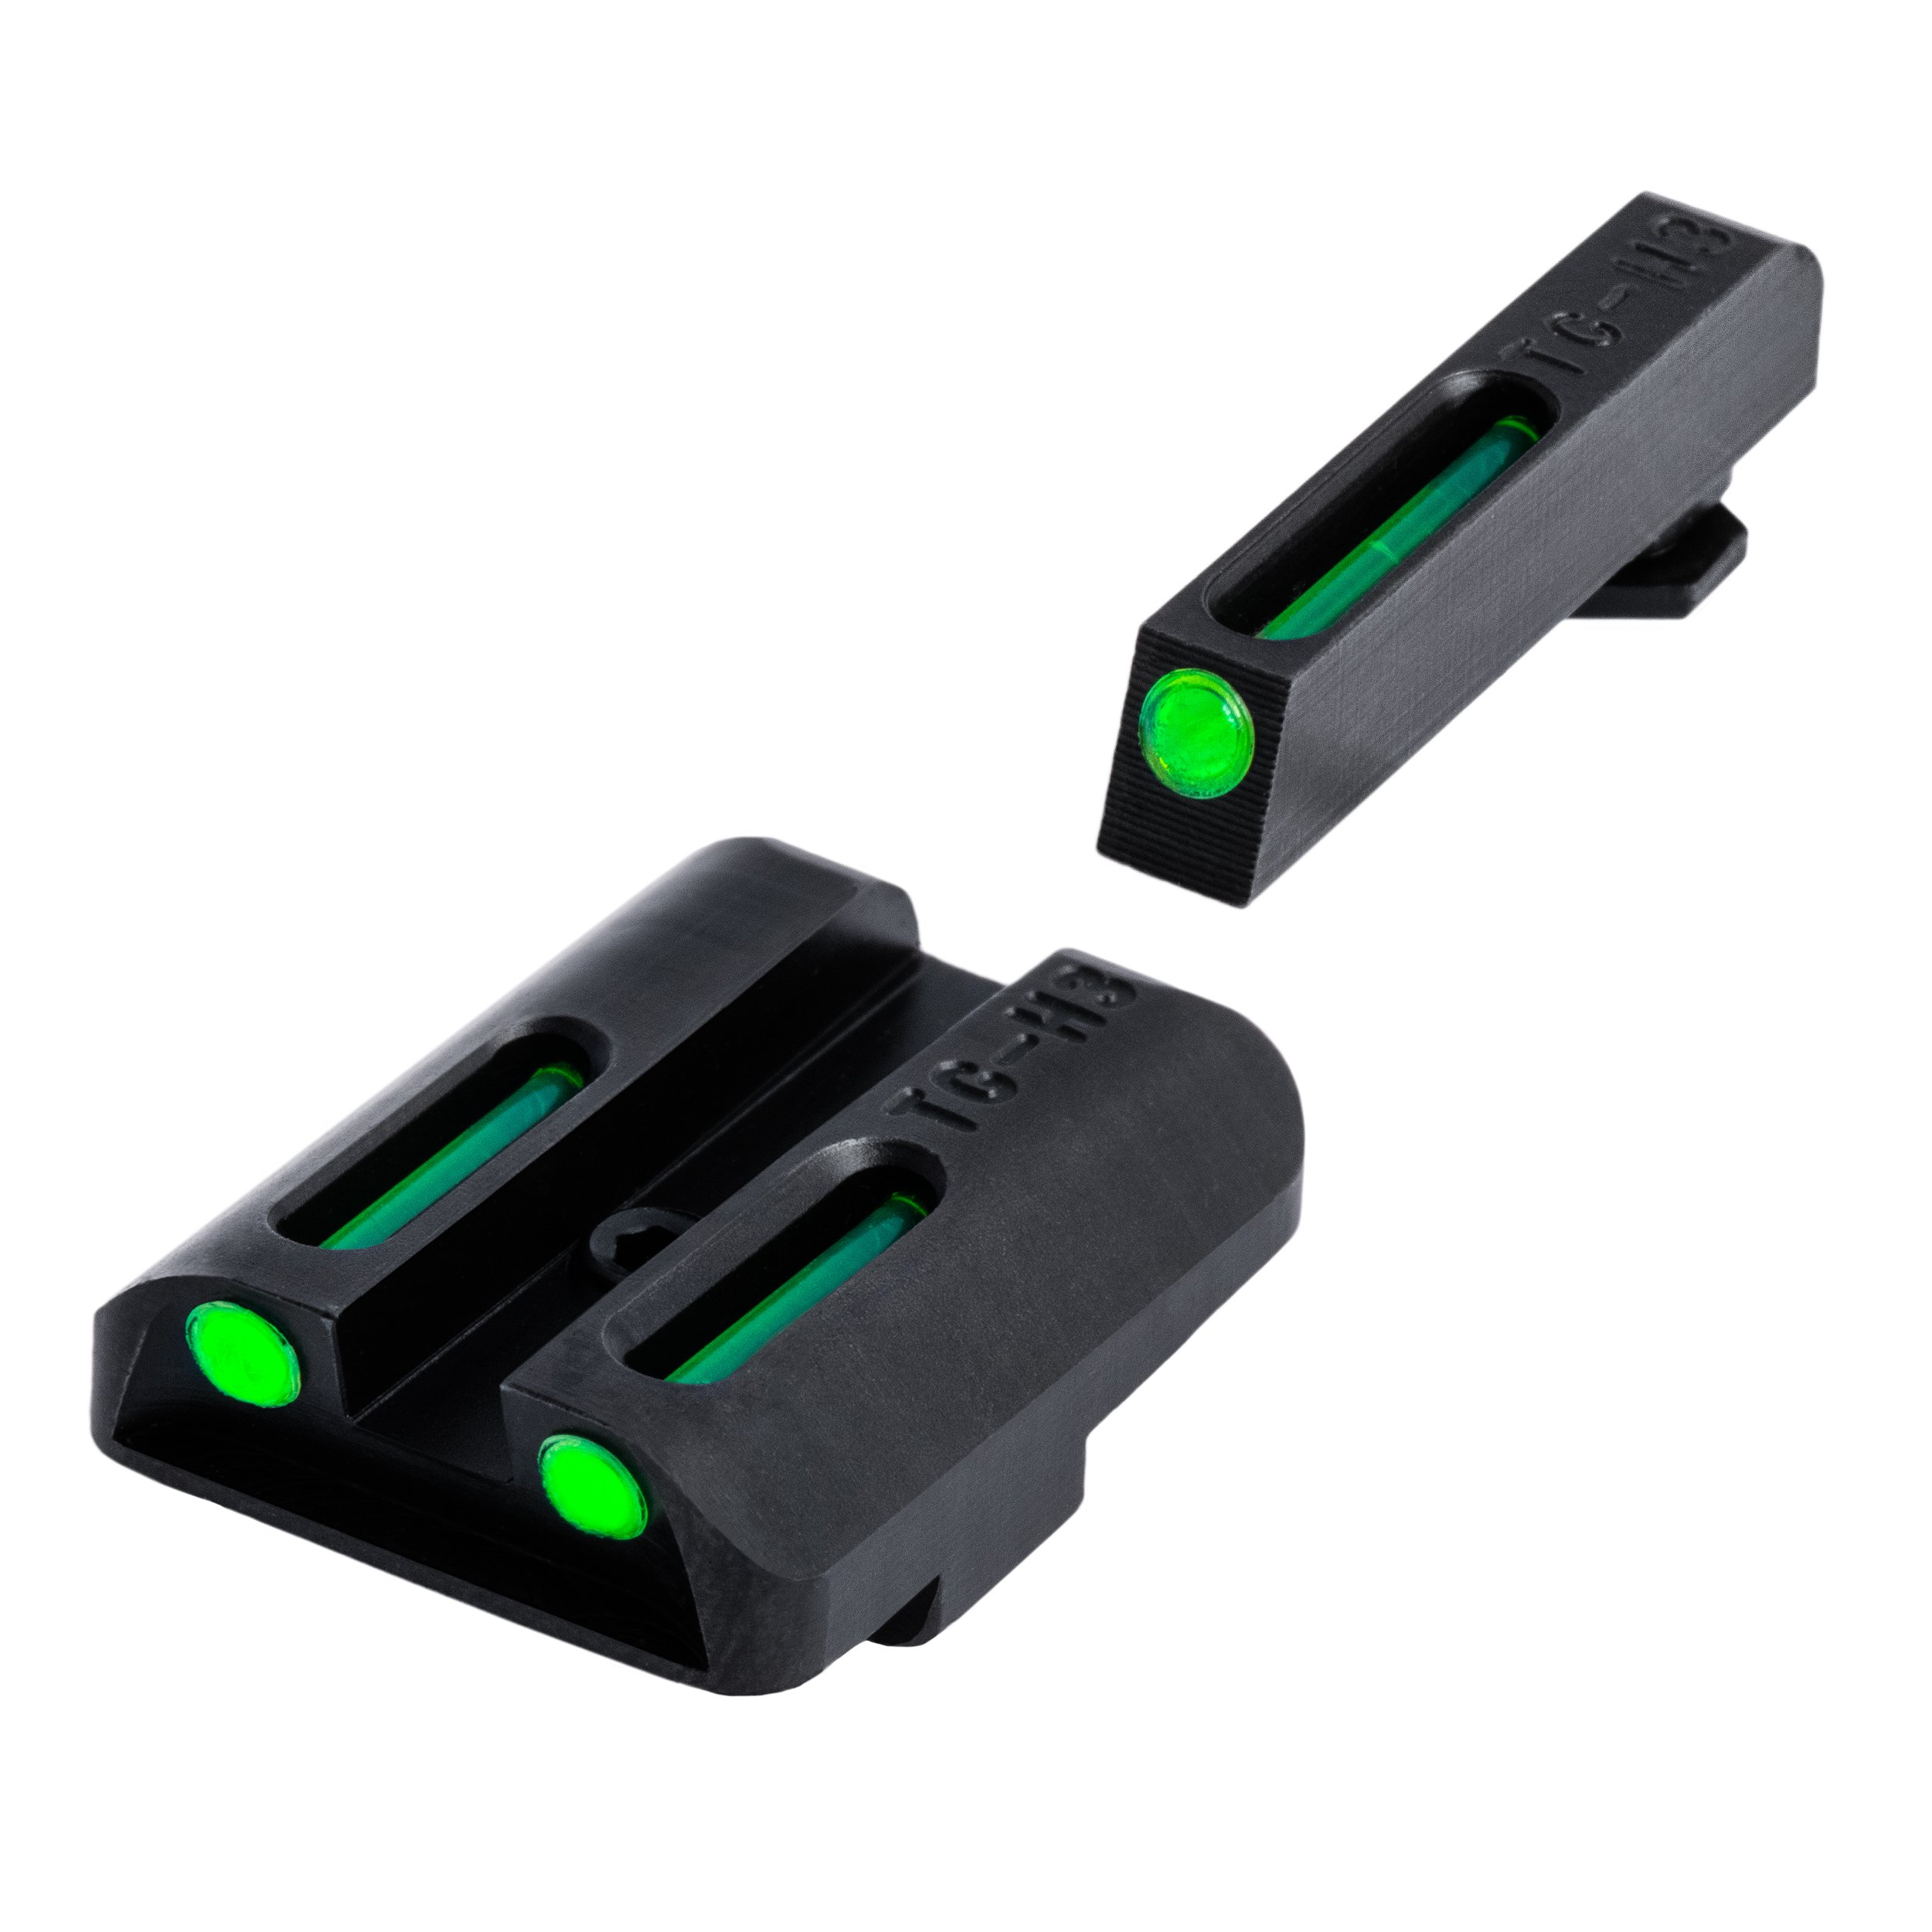 TRUGLO TFO Tritium and Fiber-Optic Handgun Sights for Glock Pistols